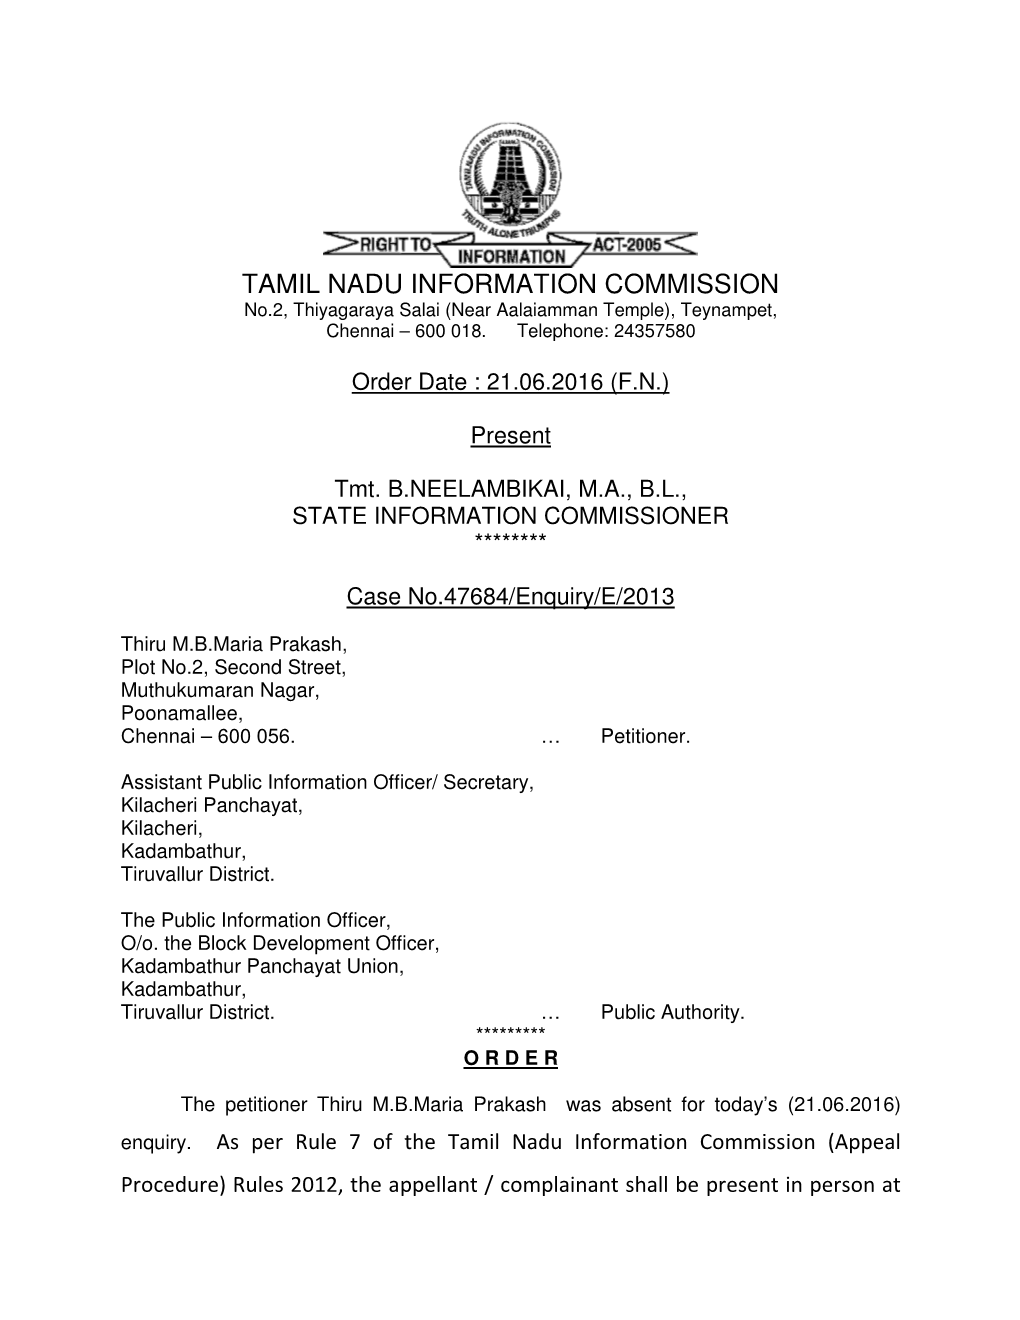 TAMIL NADU INFORMATION COMMISSION No.2, Thiyagaraya Salai (Near Aalaiamman Temple), Teynampet, Chennai – 600 018